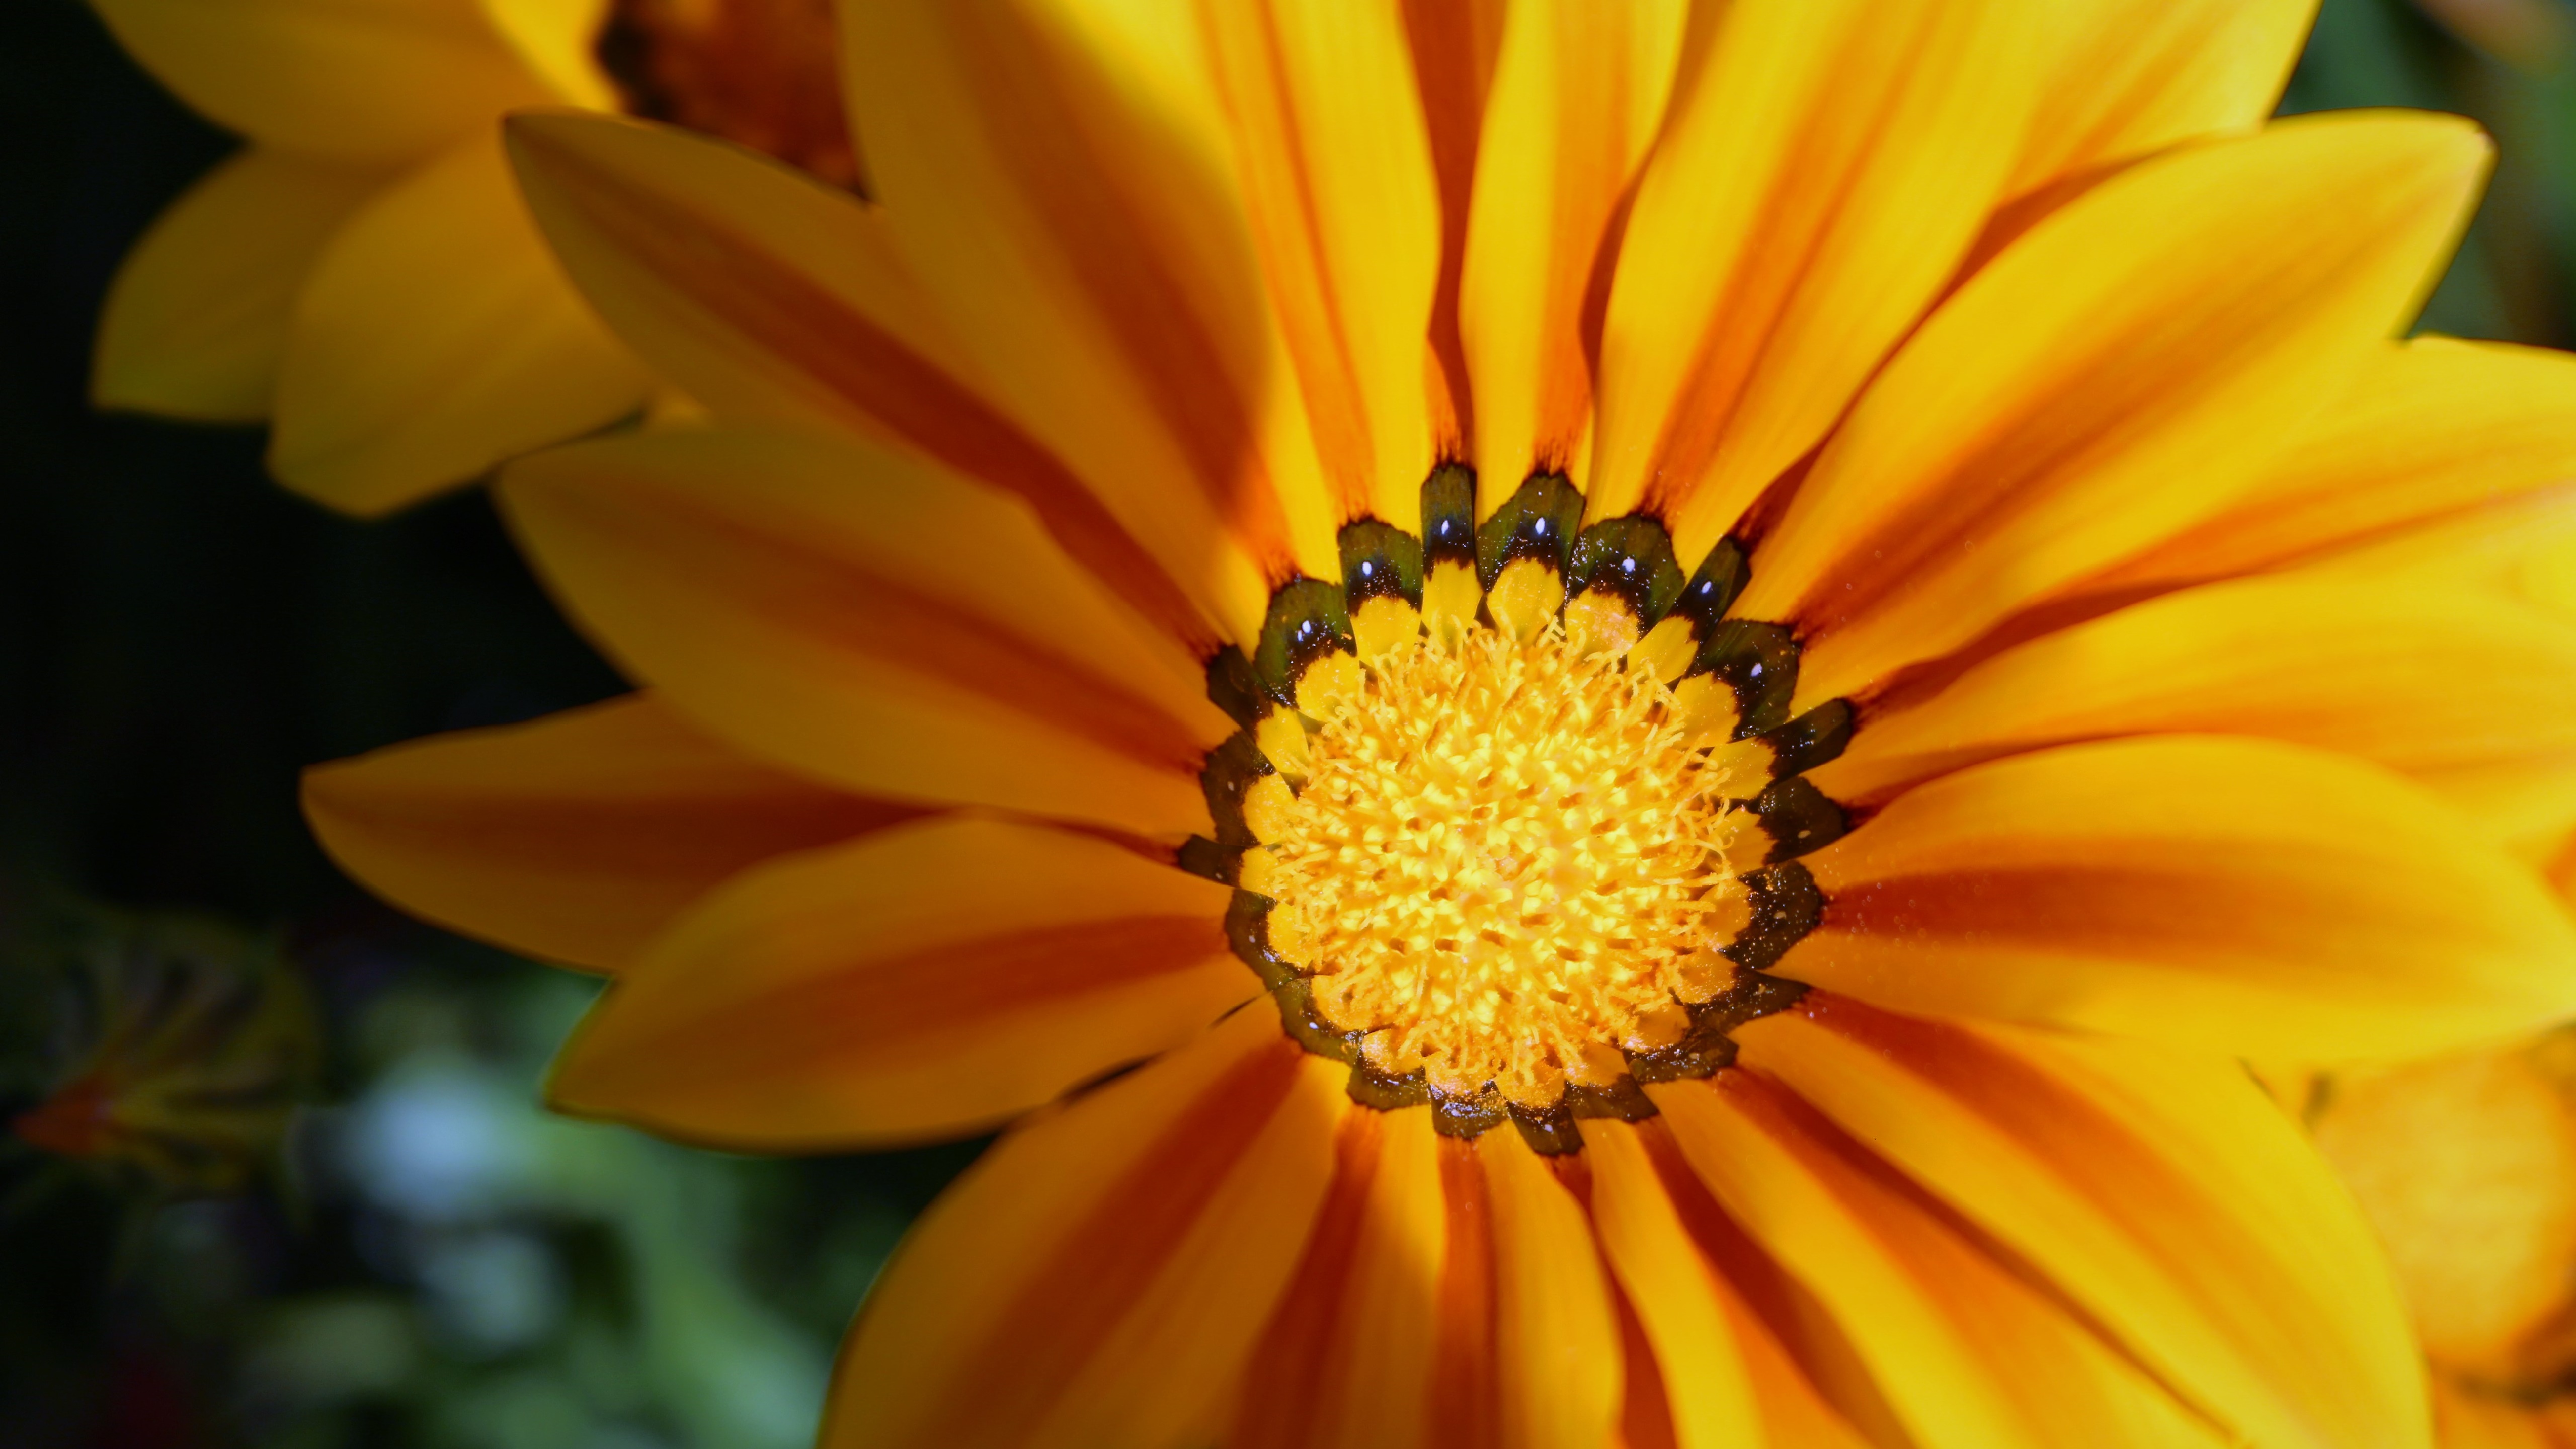 461386 descargar imagen tierra/naturaleza, gazania, flor, flor amarilla, flores: fondos de pantalla y protectores de pantalla gratis